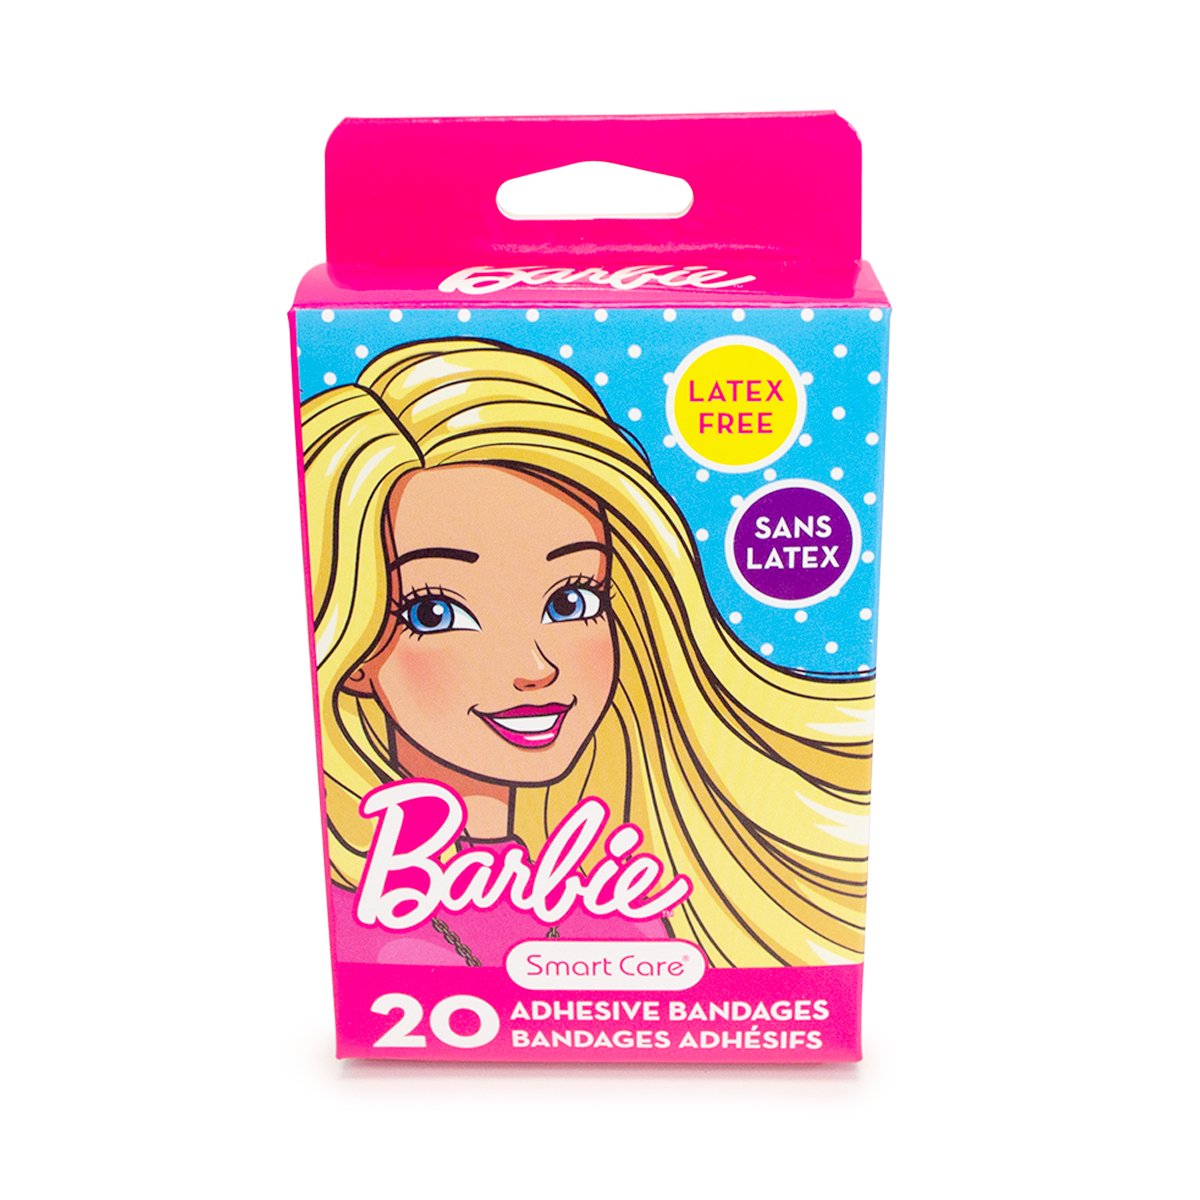 Barbie Monogram bandana –